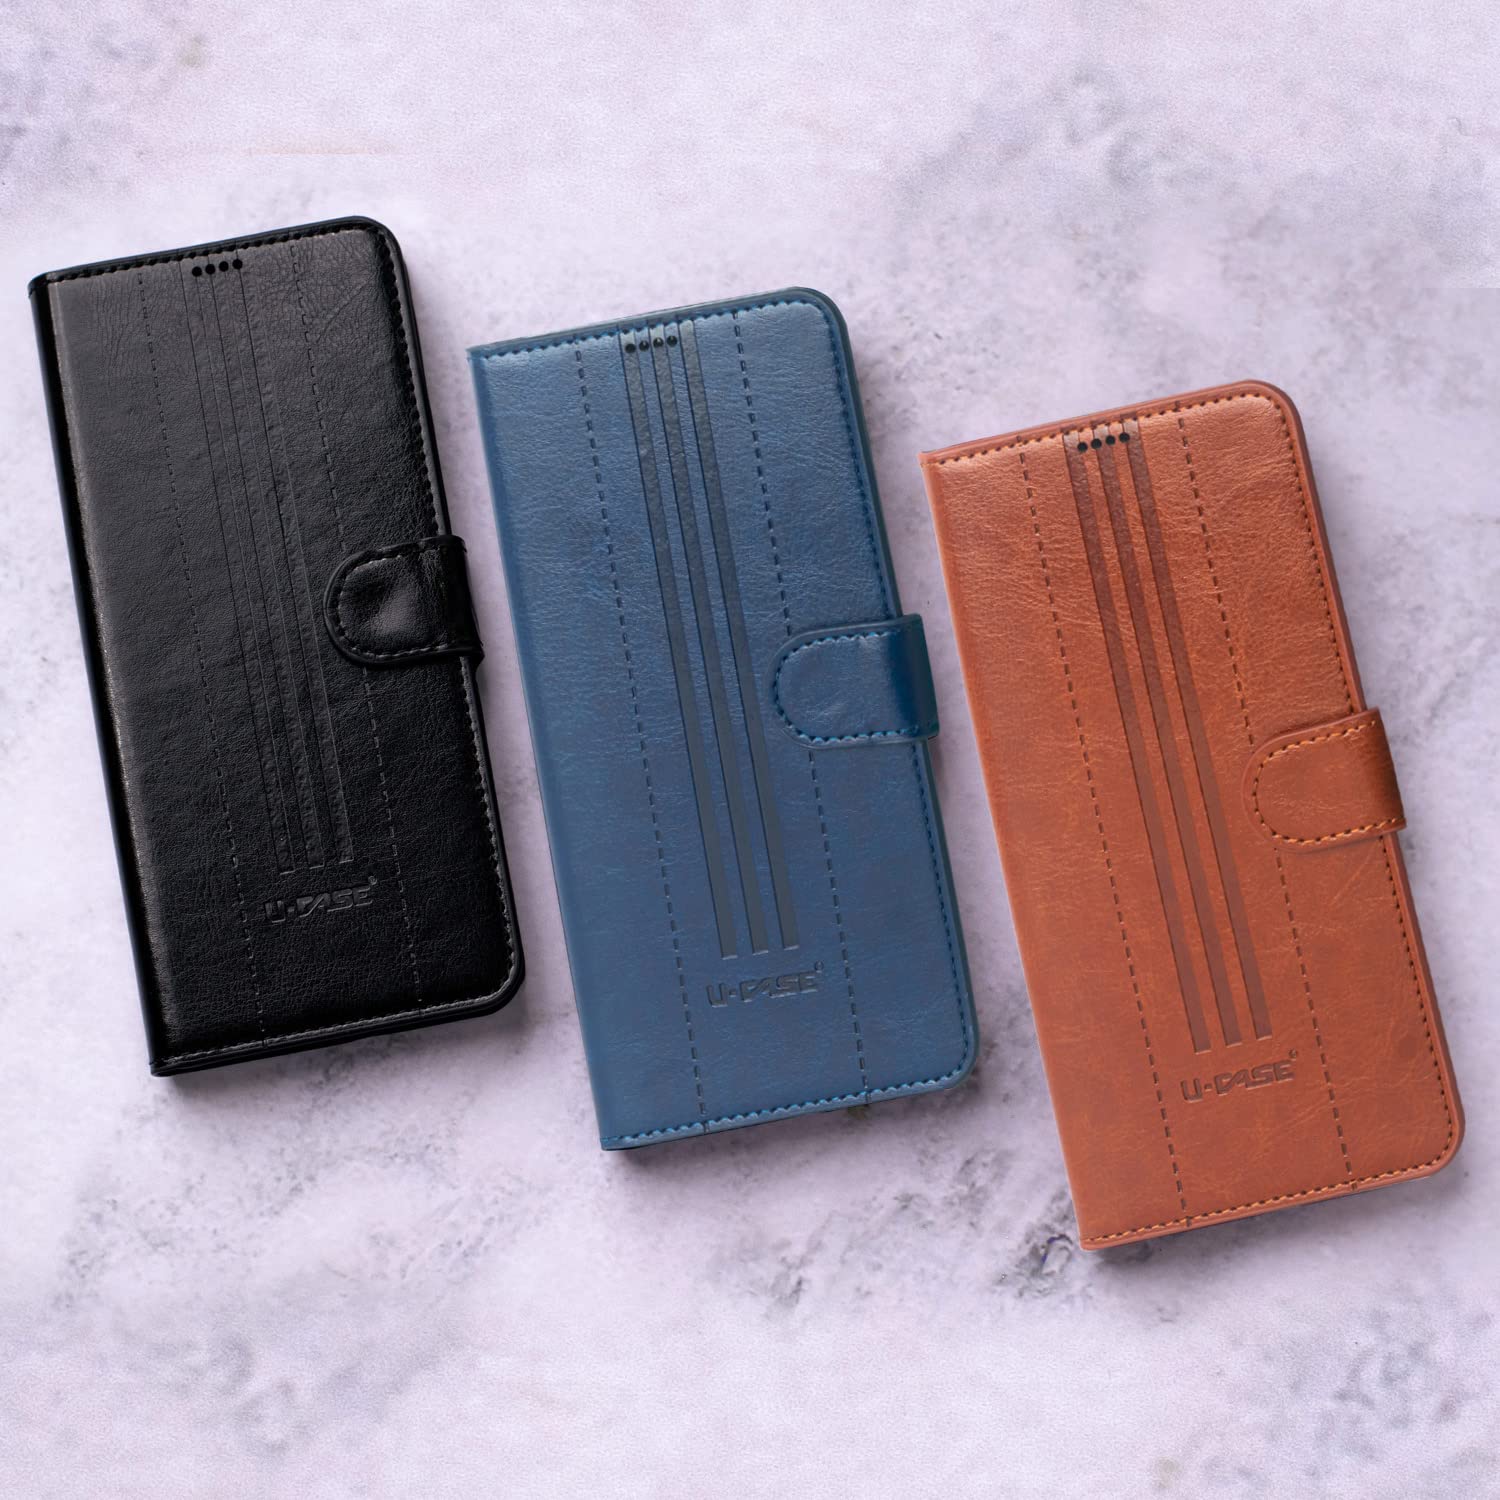 Shop U-CASE Flip Cover for Vivo Y53s Vegan Foldable Stand & Pocket Magnetic Closure colors